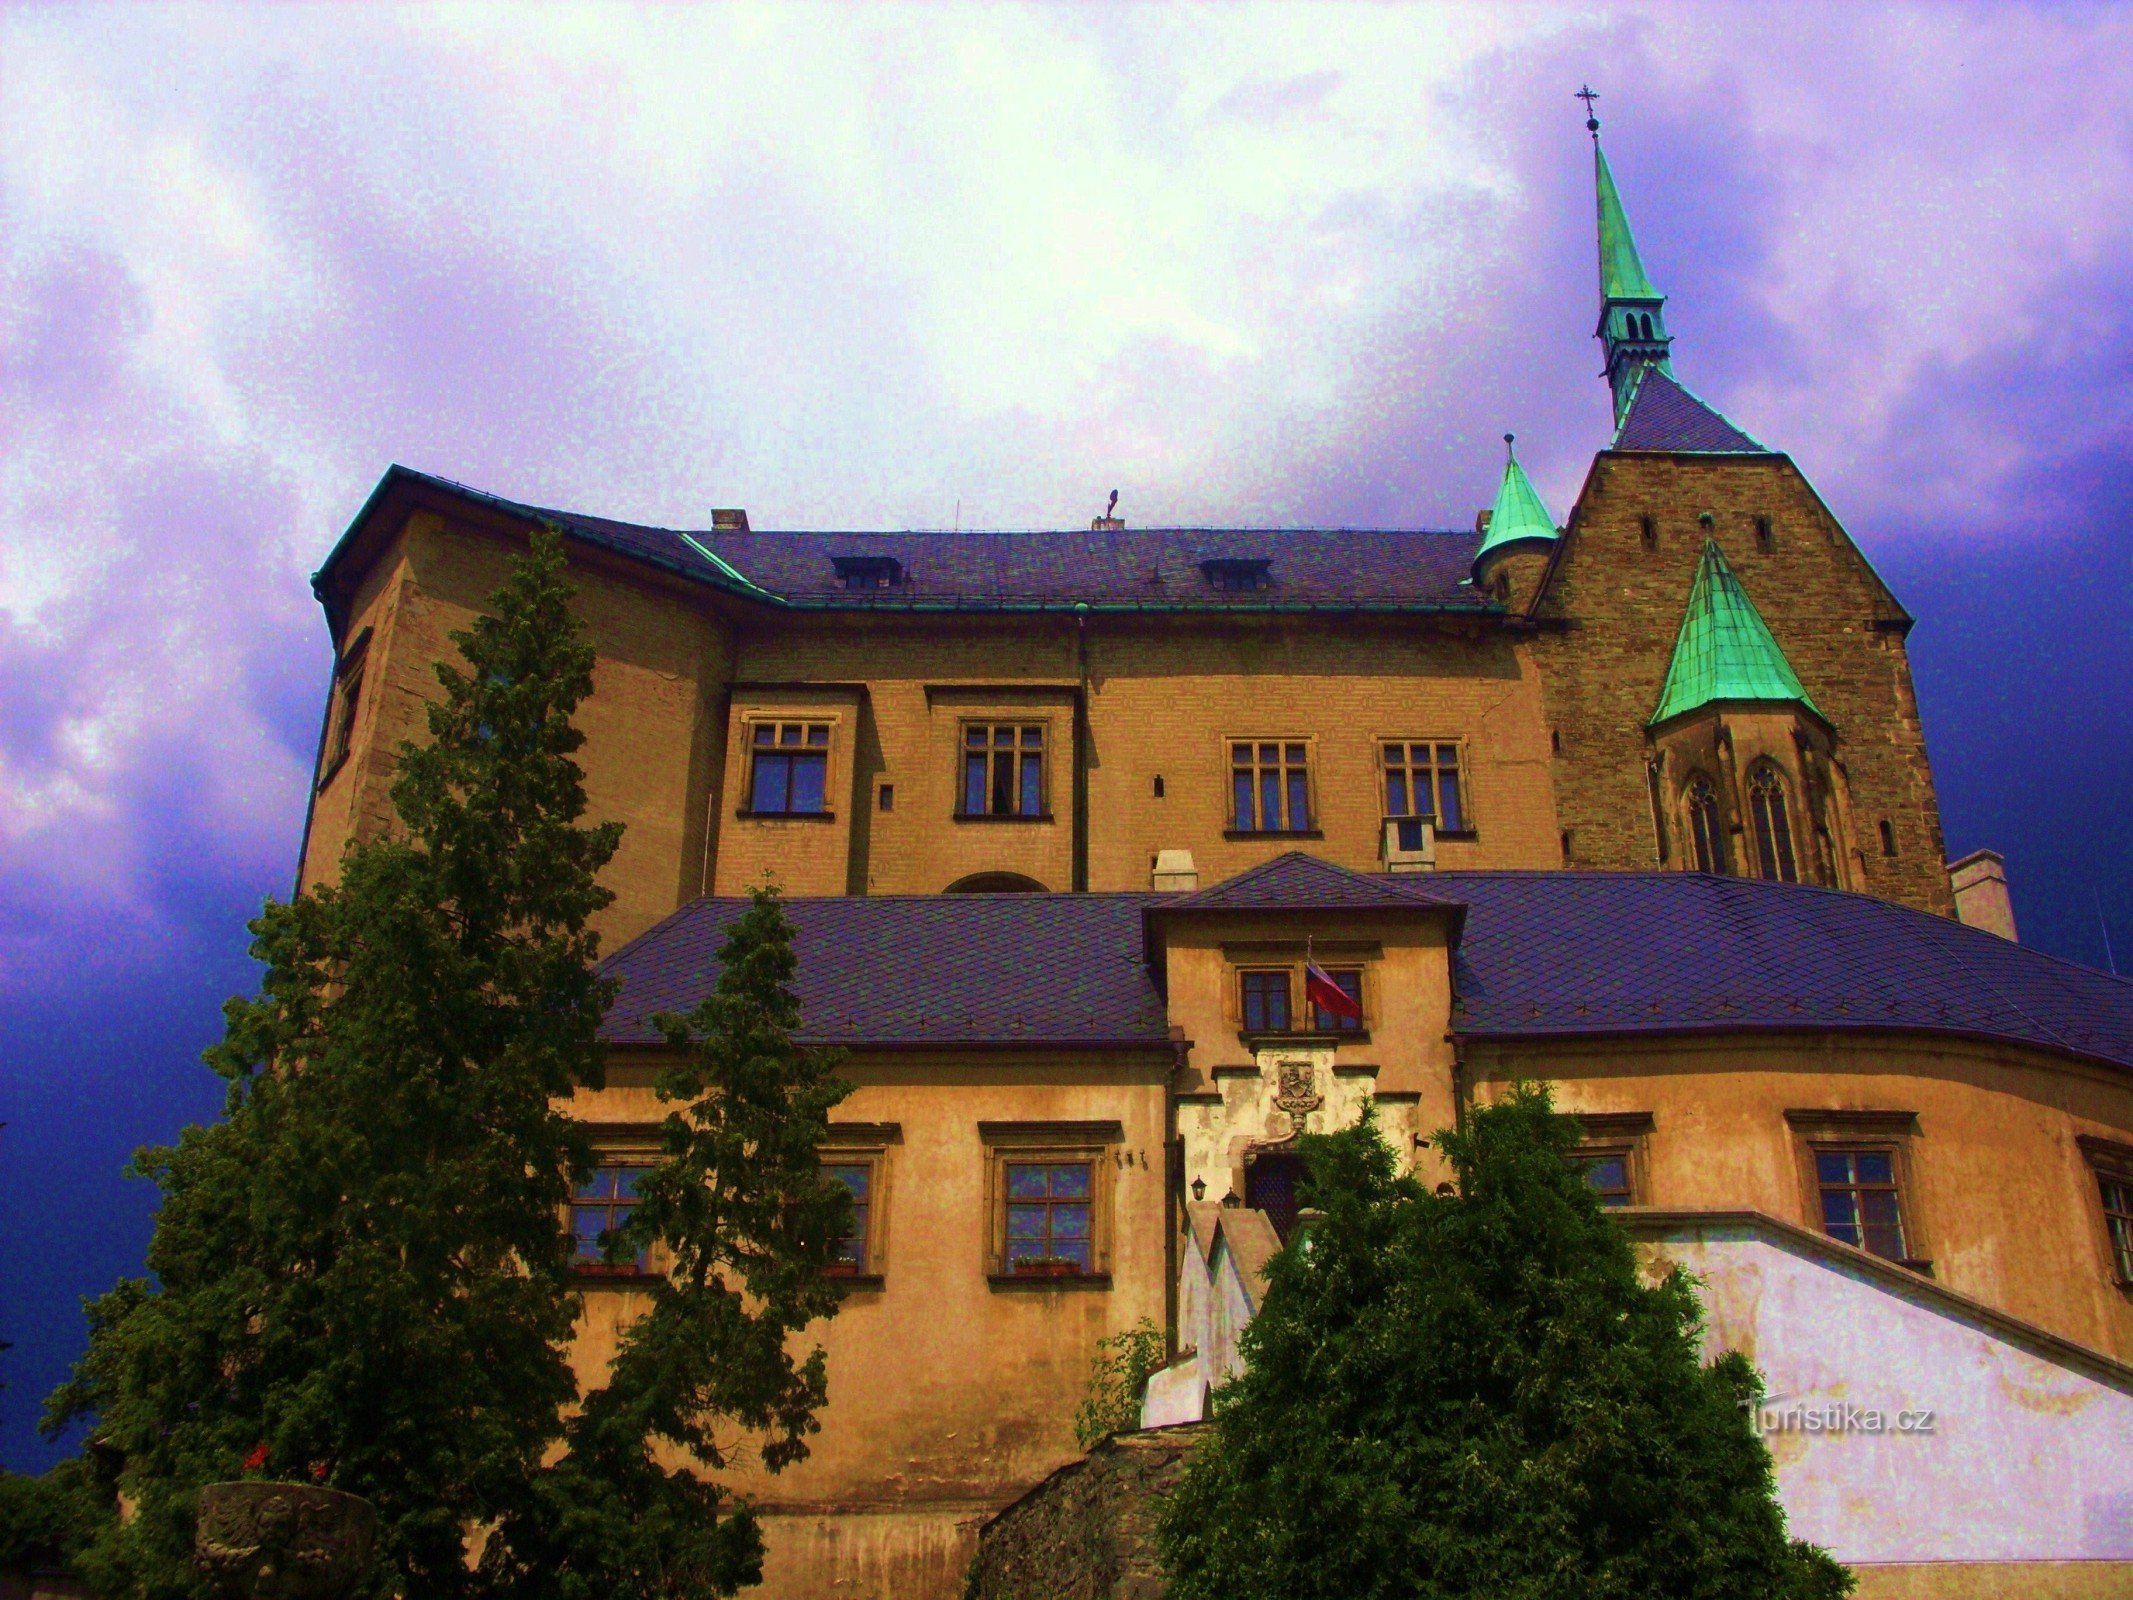 The star on the hill - Šternberk Castle